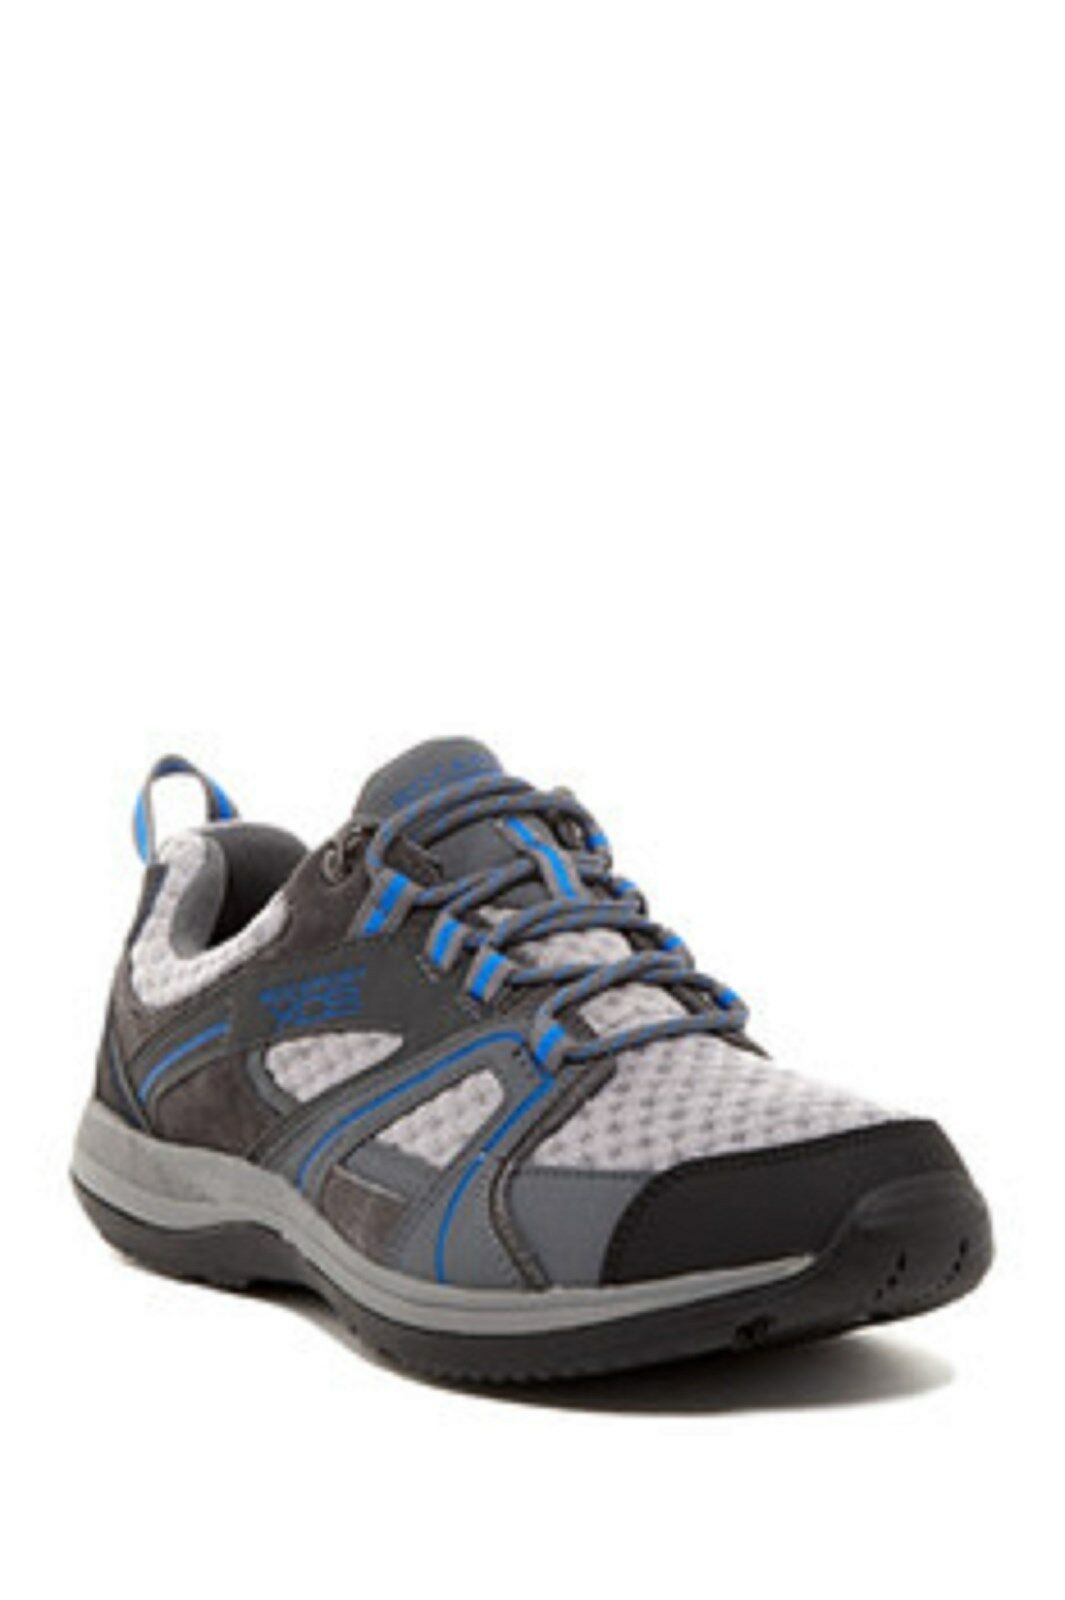 New Rockport Men's Xcs Urban Gear Web Mudguard Walking Shoes size 9